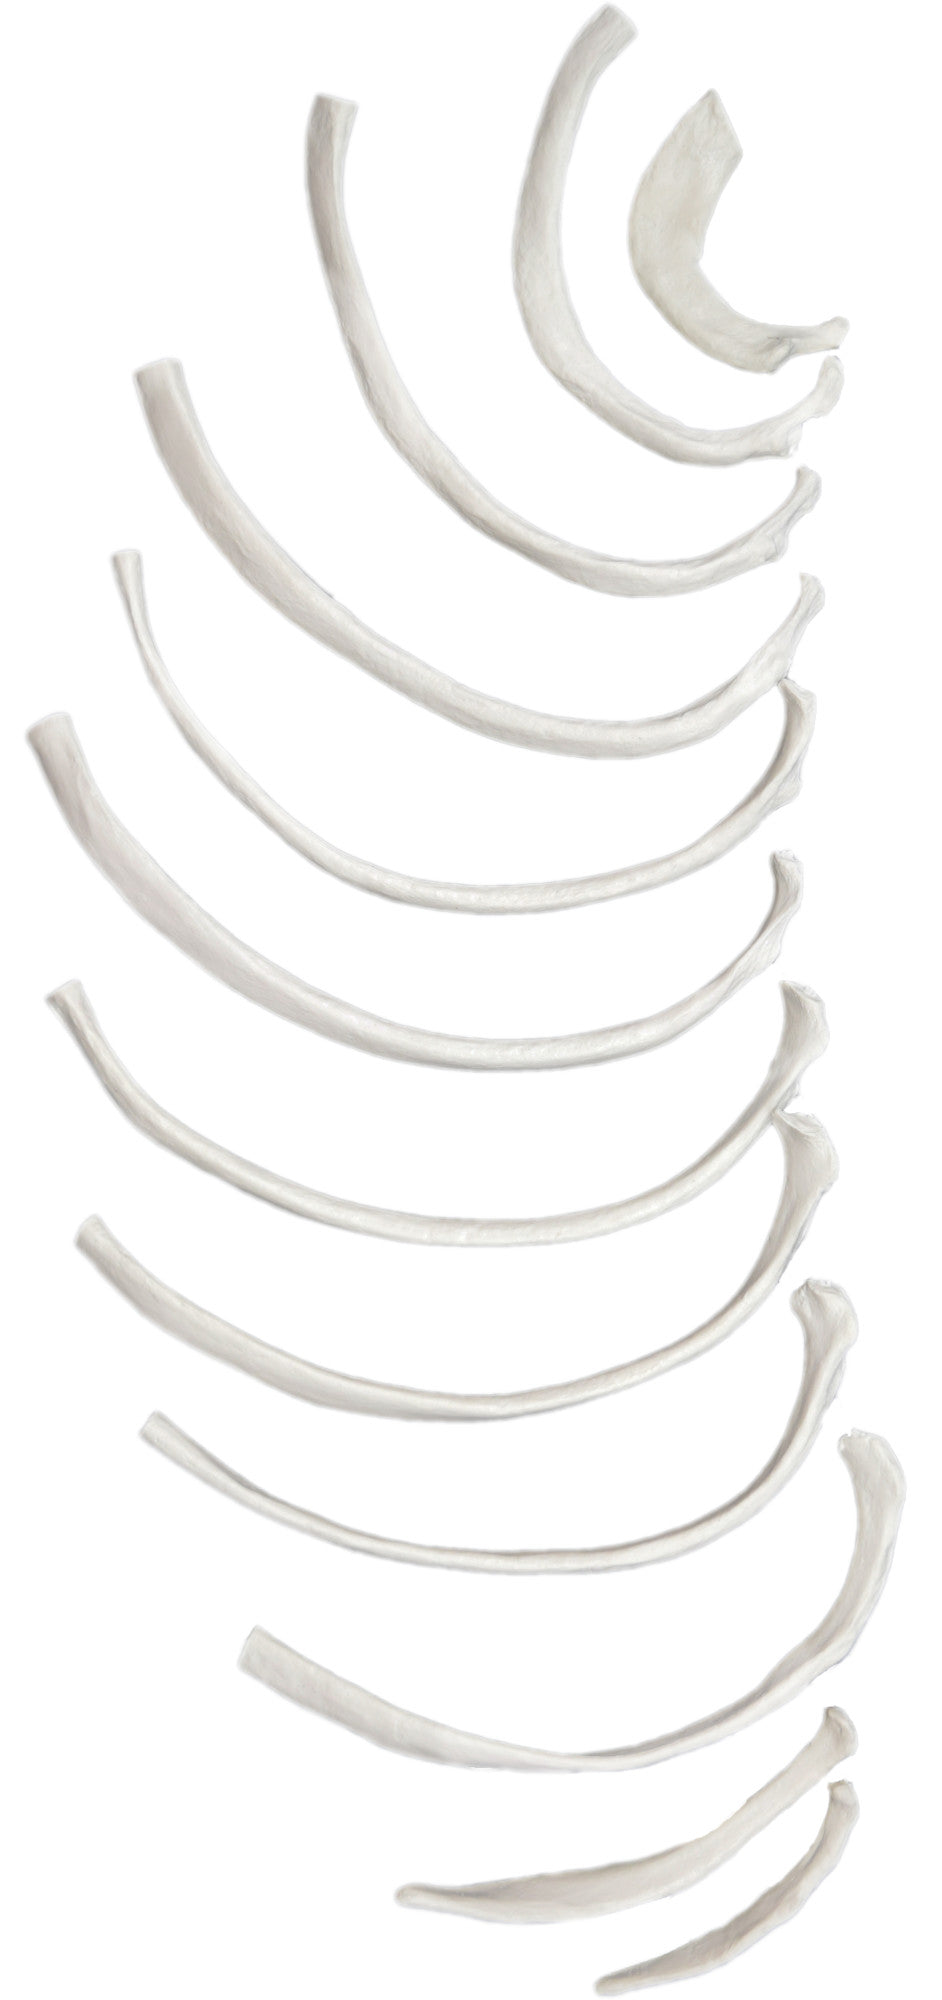 Disarticulated Rib Bones, Left, Anatomically Accurate Bone Replica ...